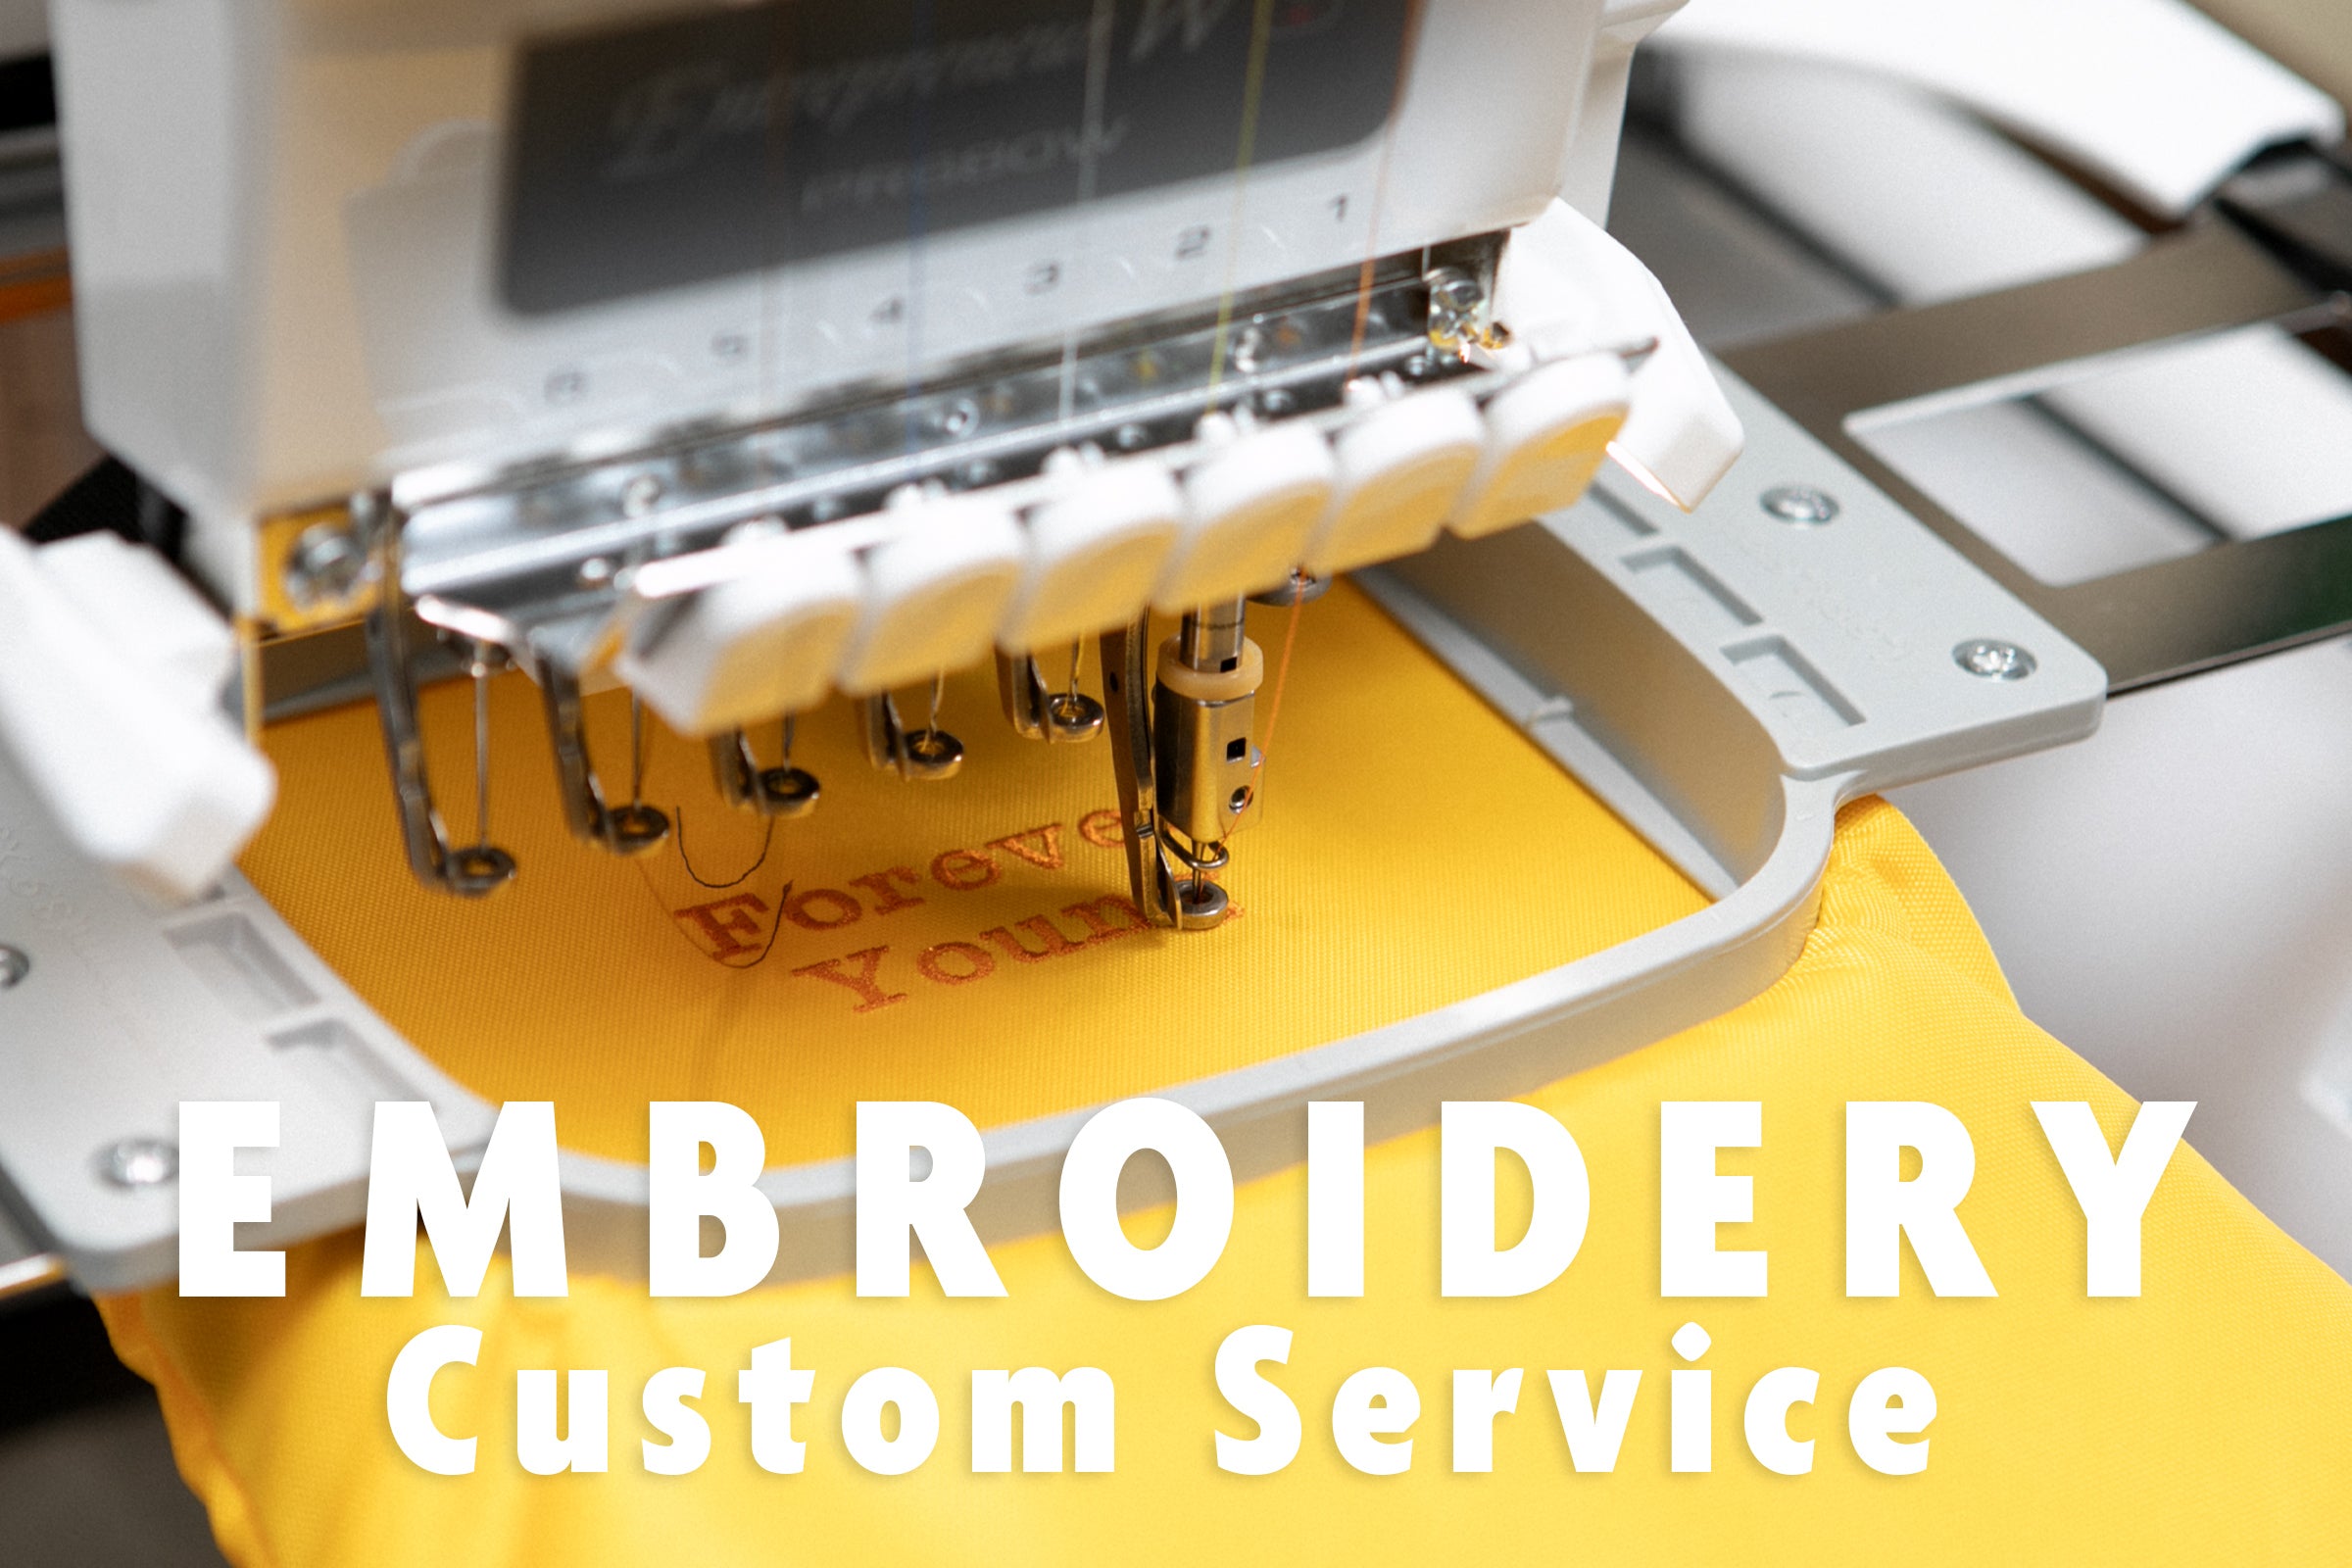 『Embroidery Custom Service』/ 刺繍カスタムサービス開始のお知らせ